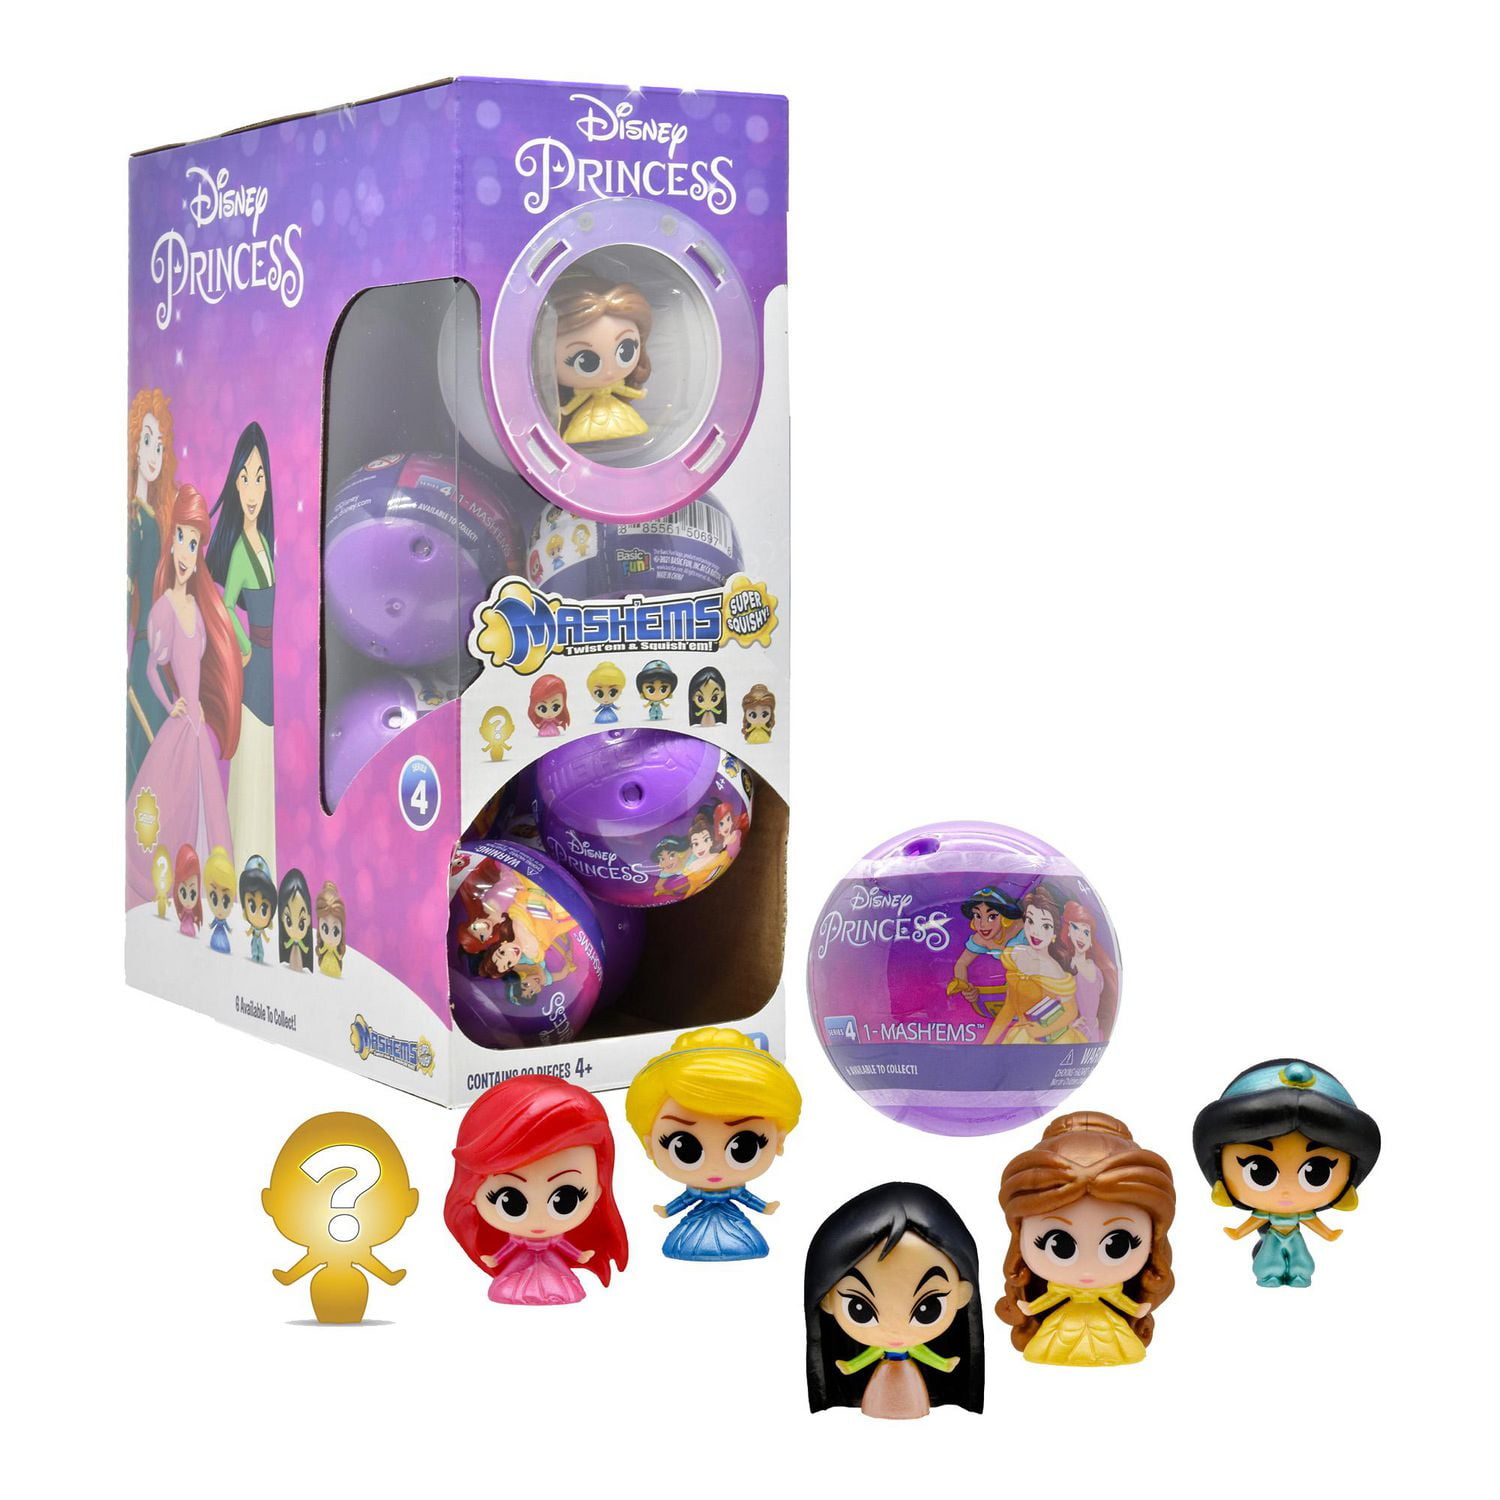 Mash'ems - Disney Princess - Sphere Capsule S4, Mash'ems Disney